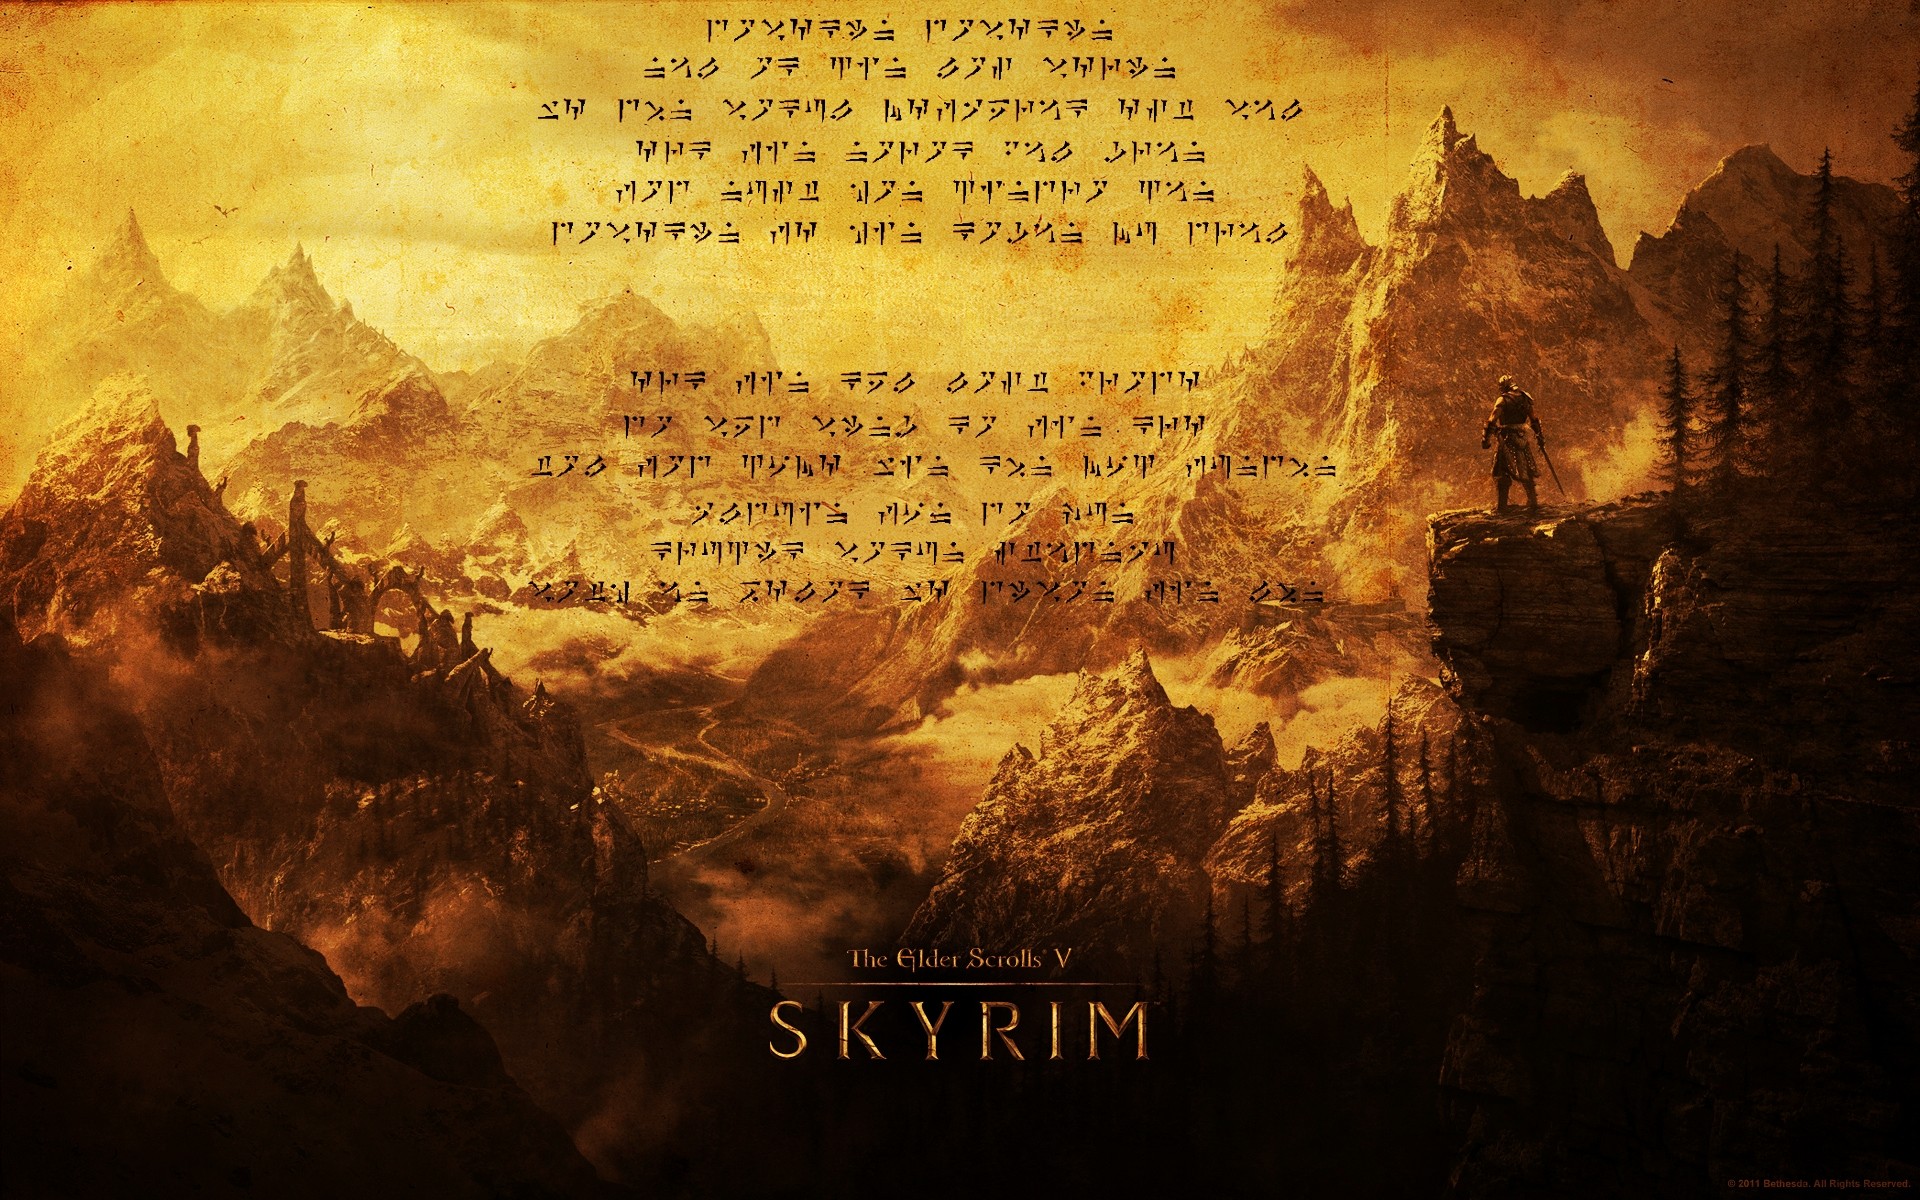 The Elder Scrolls V: Skyrim, Dragonborn, Elder Scrolls, Video Games Wallpaper